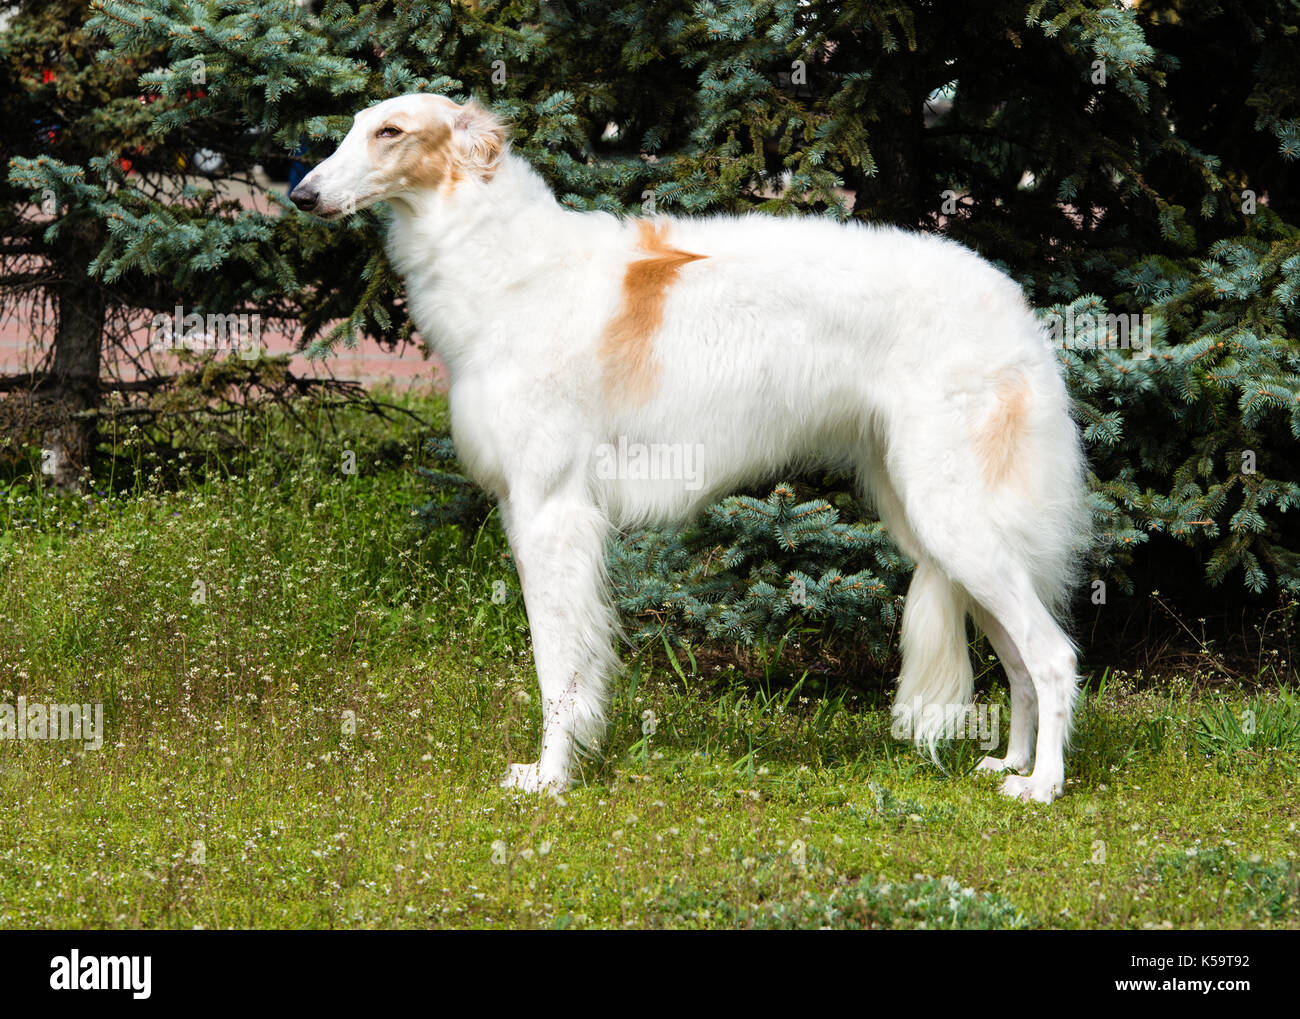 Borzoi Russian profile. The Borzoi Russian dog is on the green grass. Stock Photo